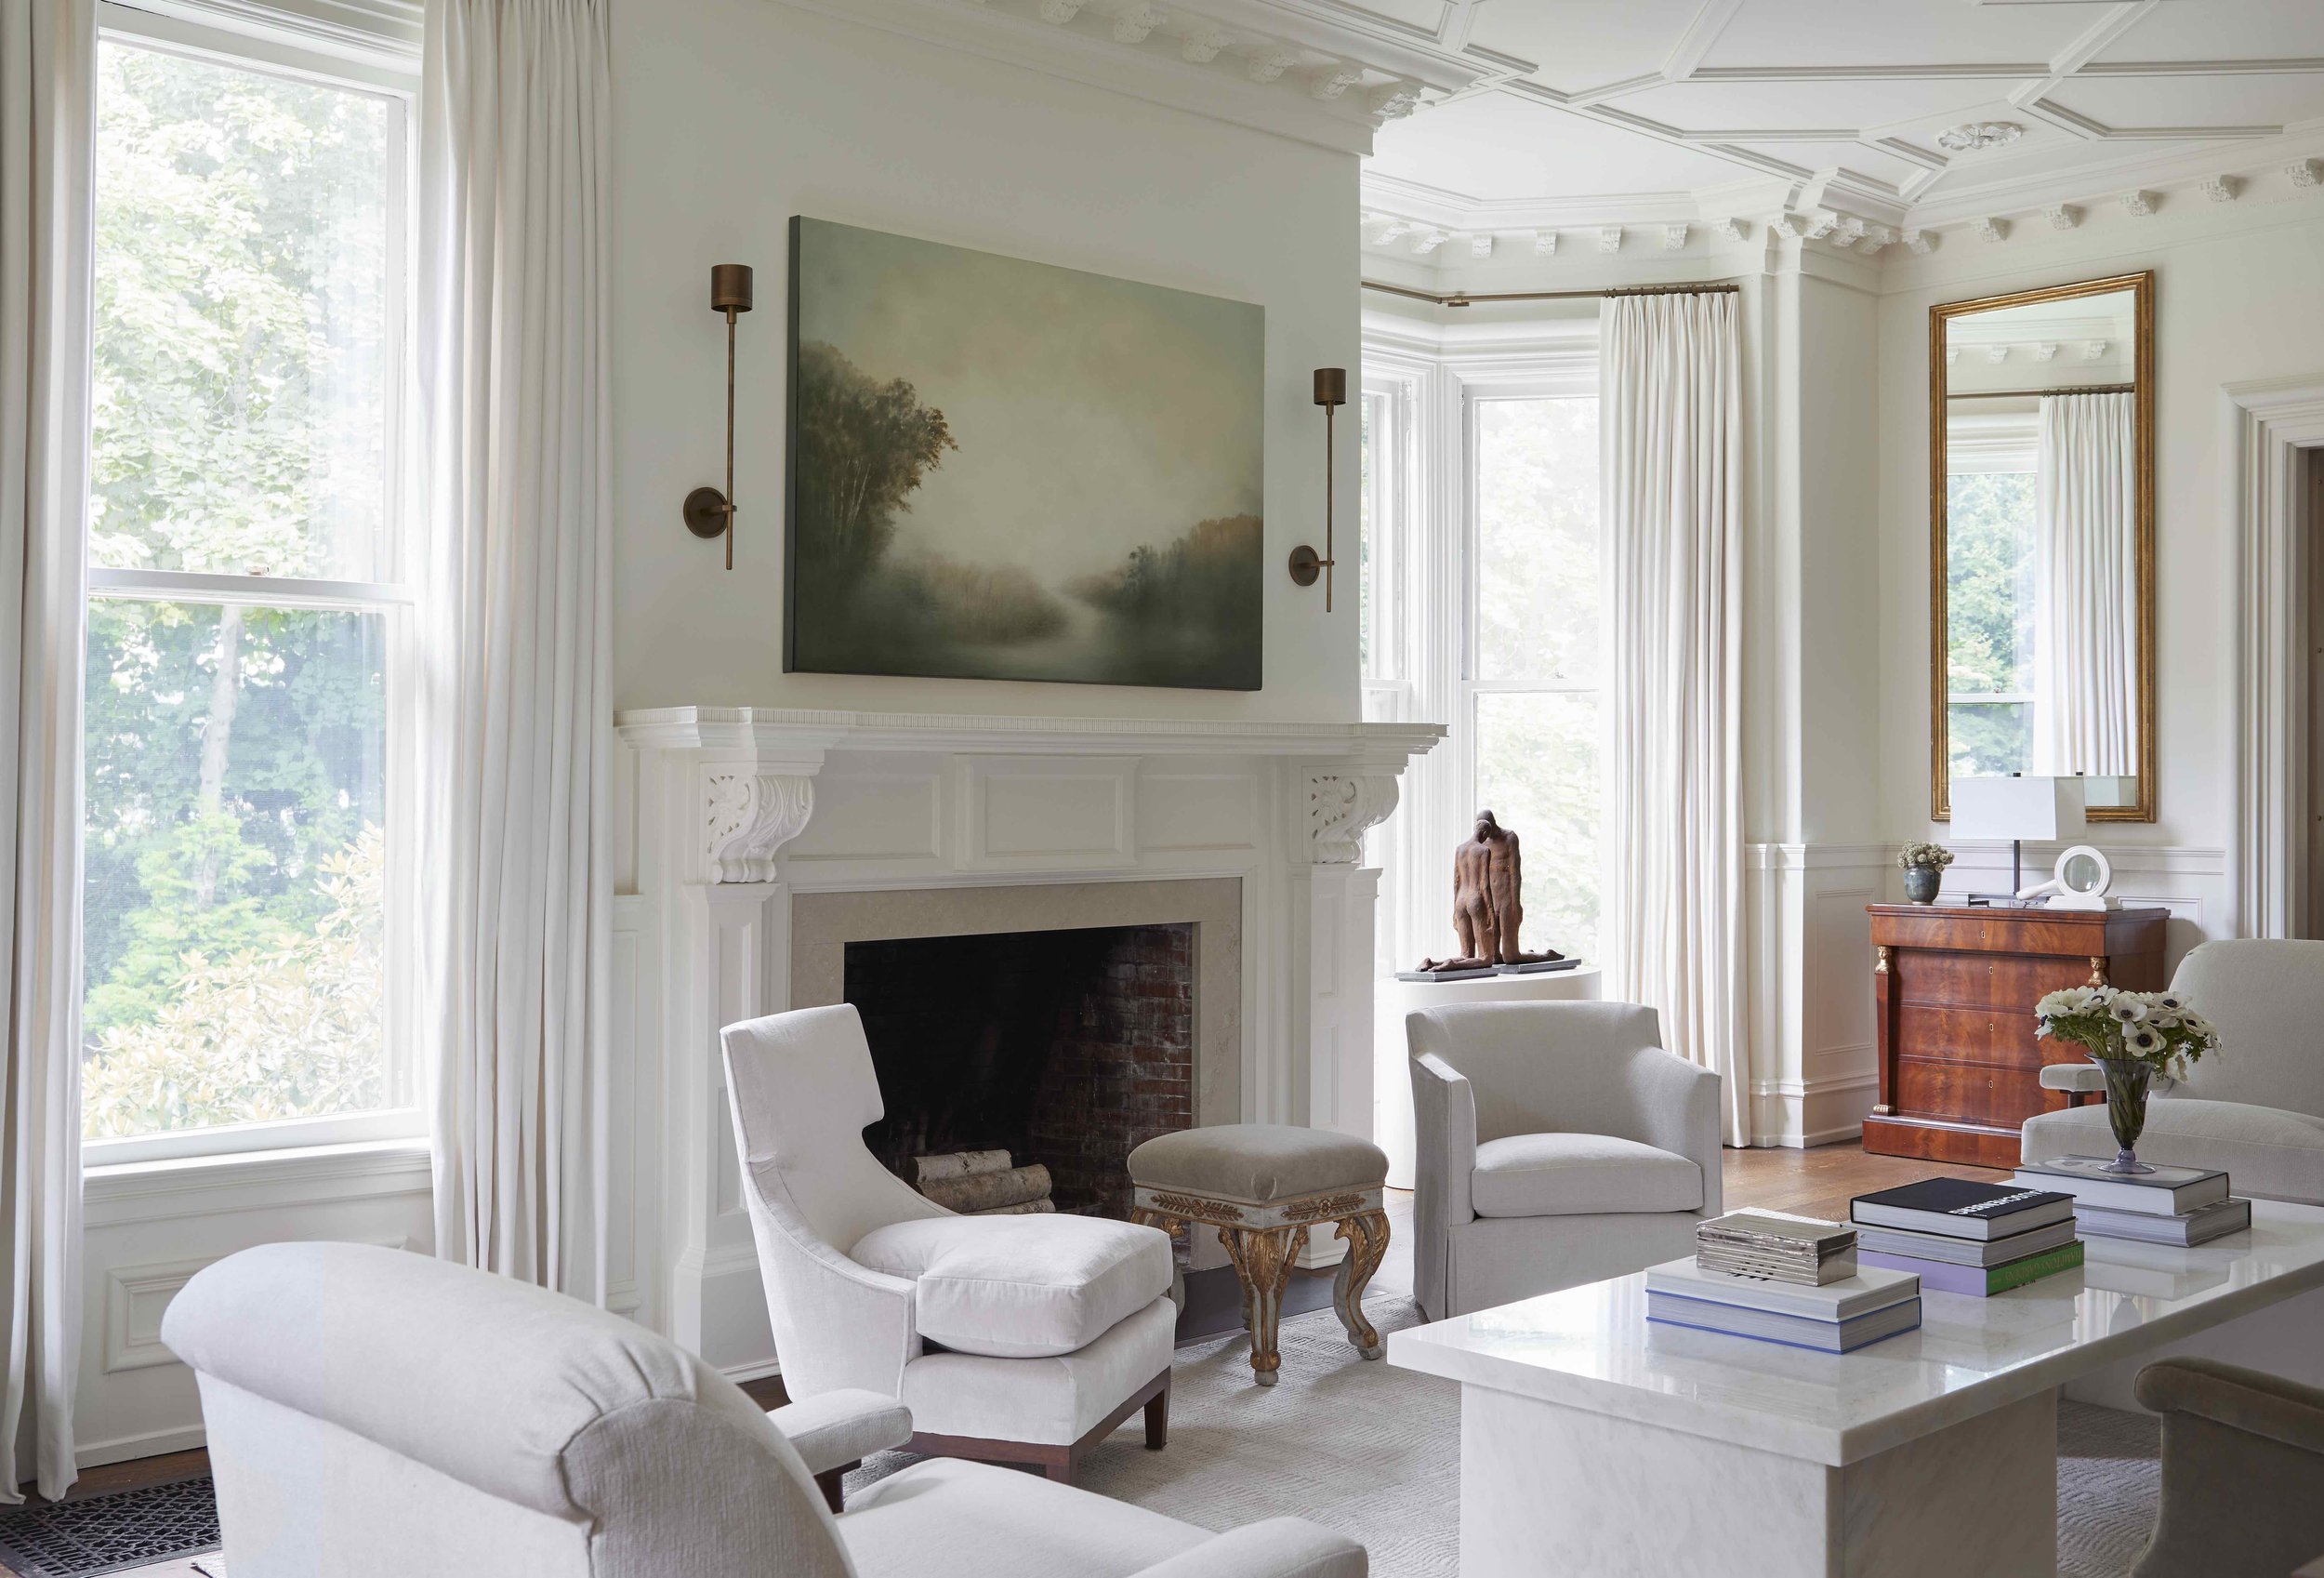   INTERIOR DESIGN:  Lisa Tharp Design for “The Gallerist's Residence”    Photographer Credit: Read McKendree  